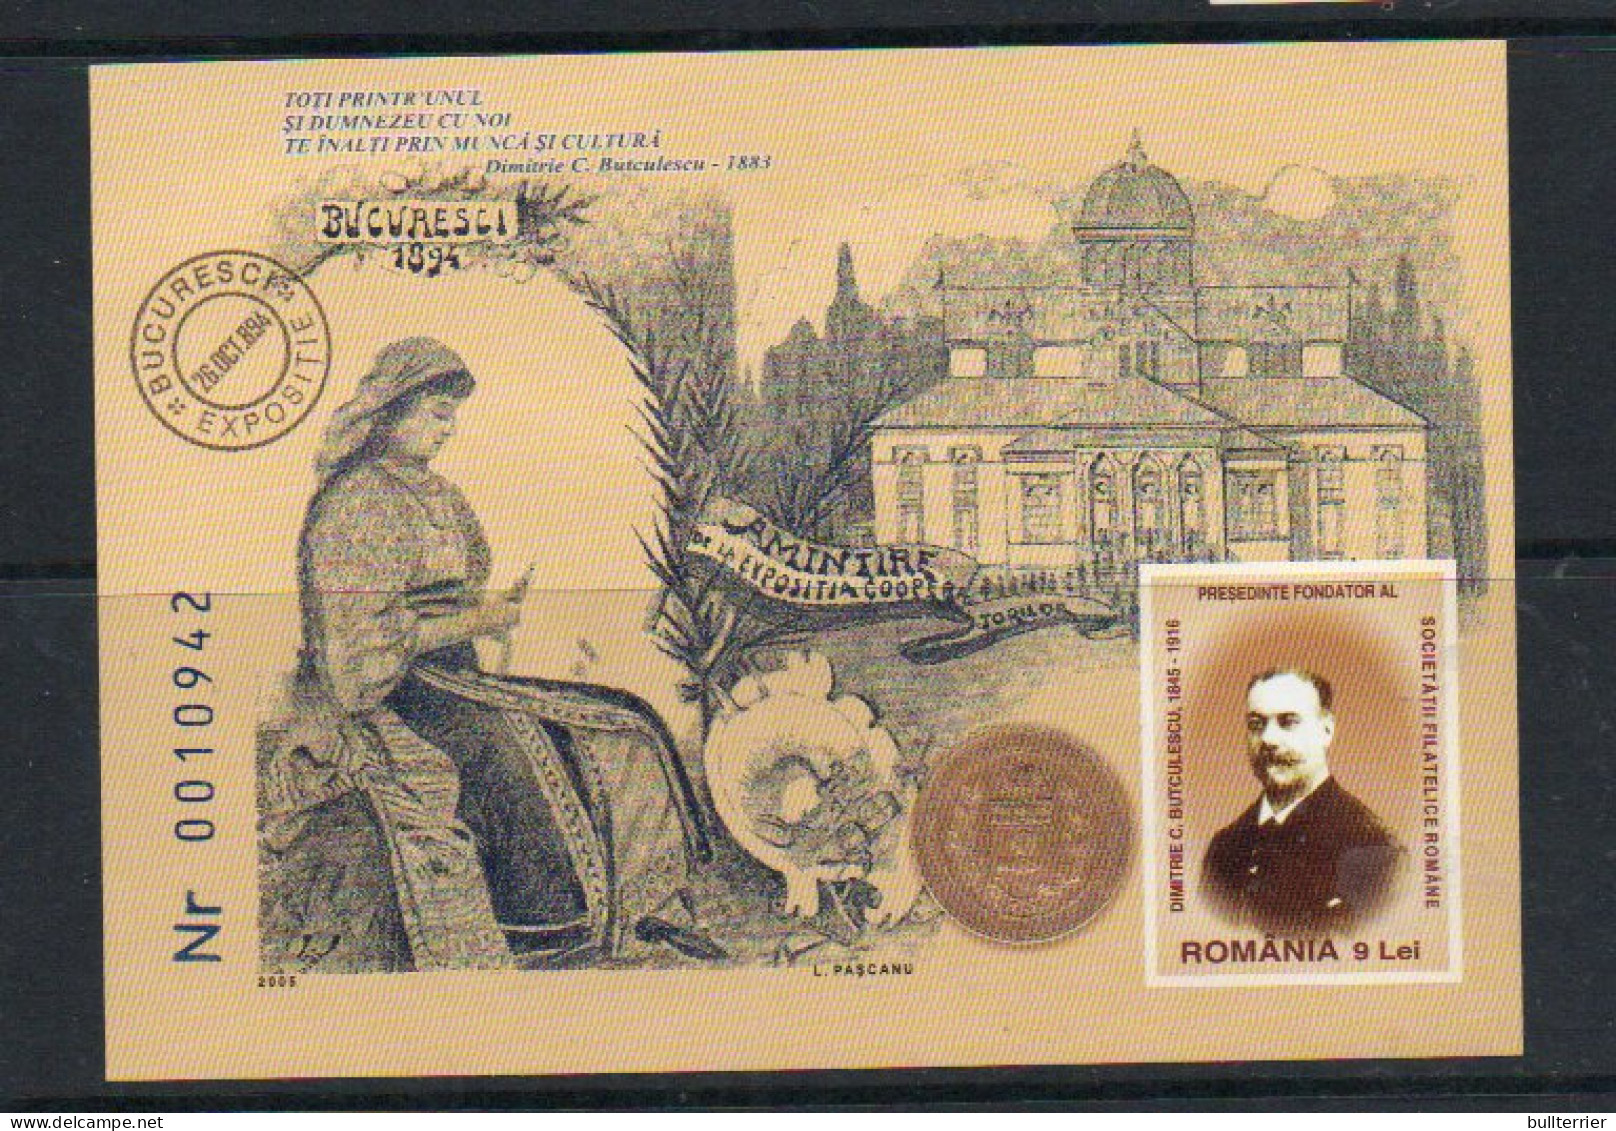 ROMANIA - 2005 - DIMITRI BUTCULESCU  NORDPOSTA  SOUVENIR SHEET MINT NEVER HINGED SG £7.50 - Unused Stamps